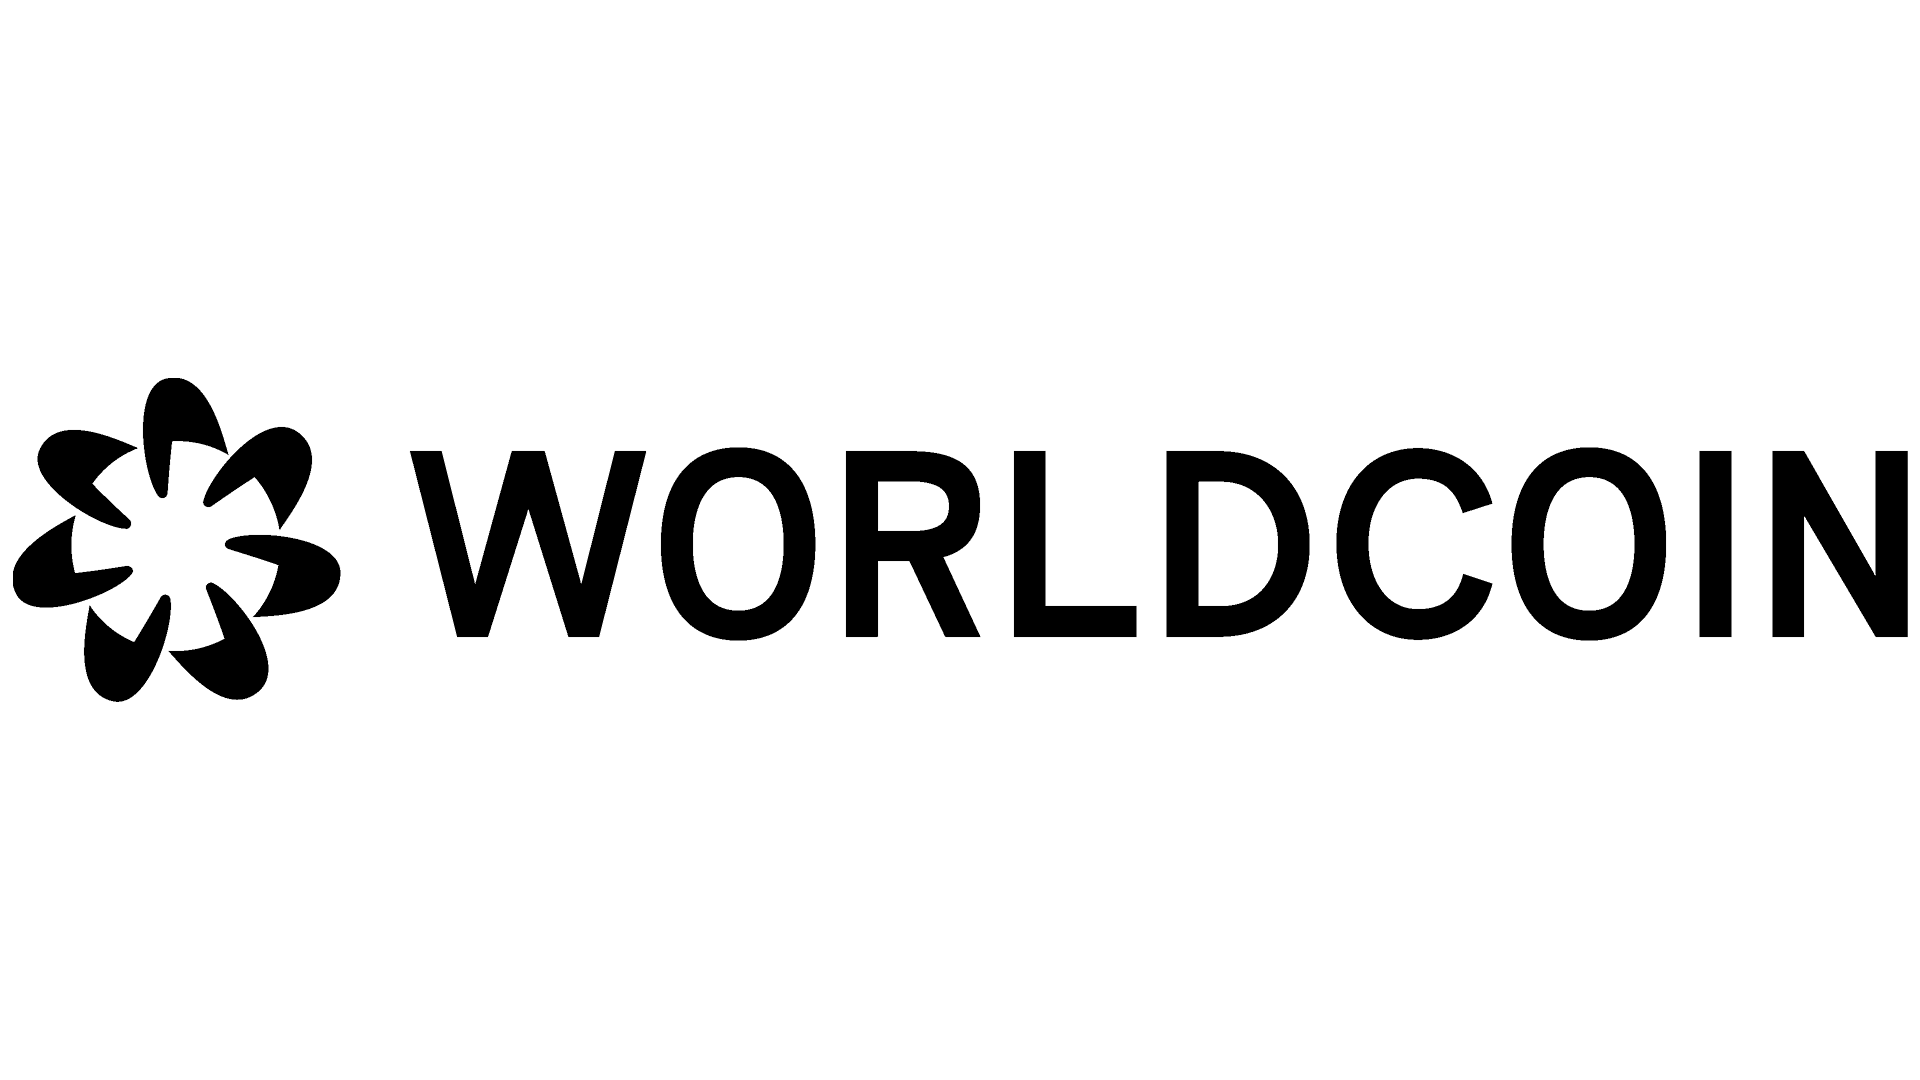 WORLDCOIN Logo